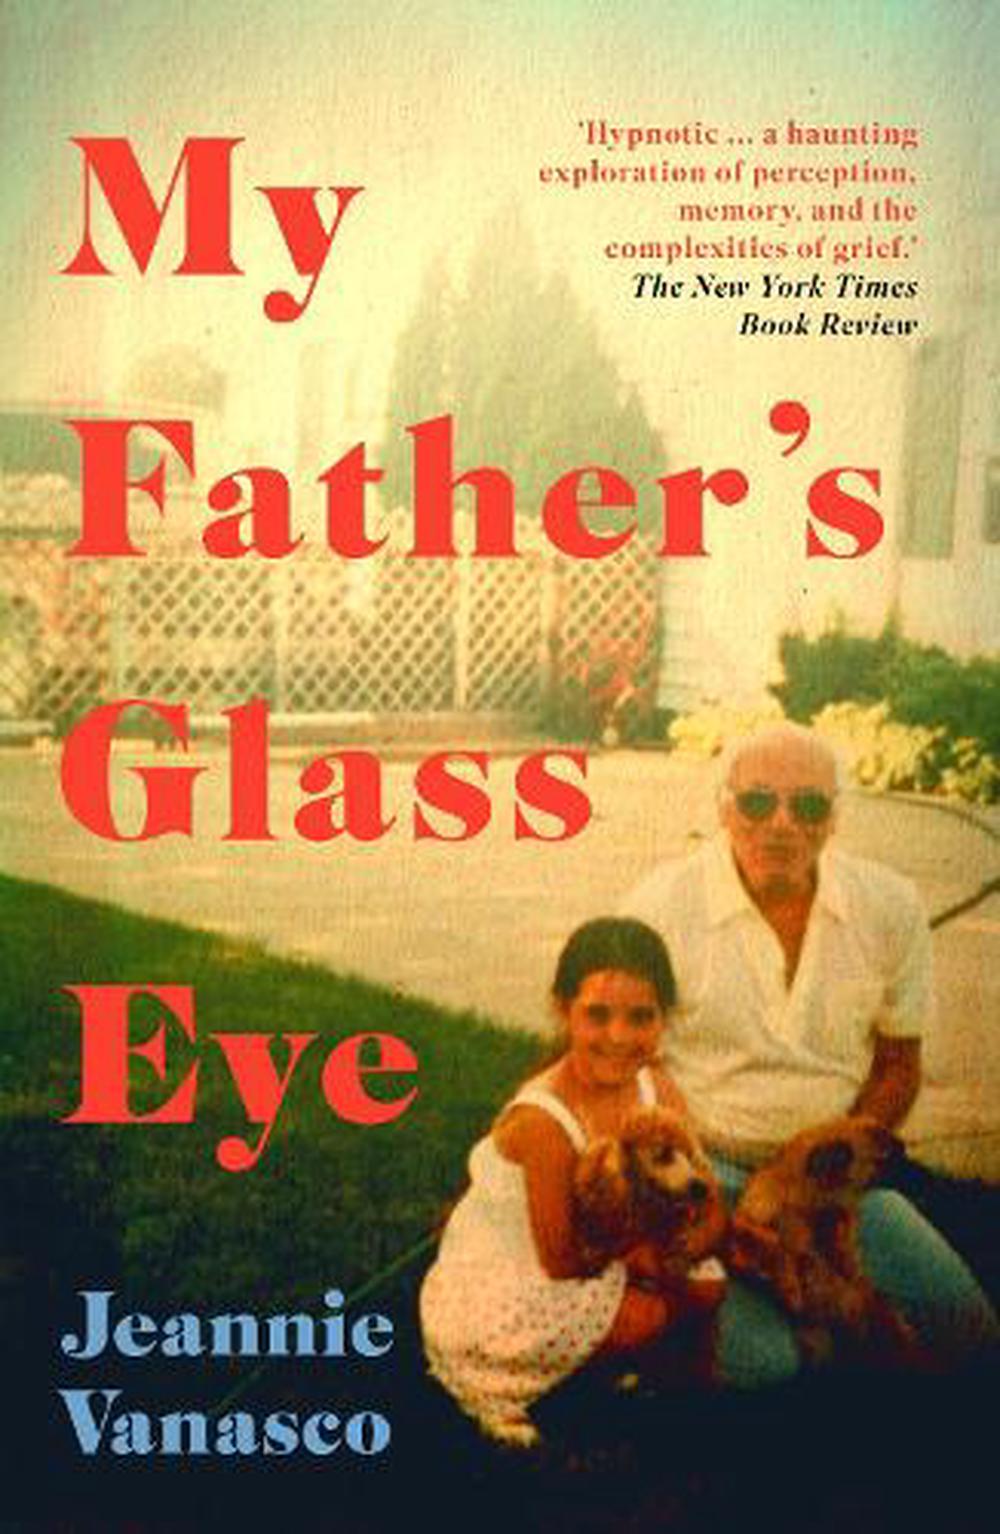 The Glass Eye by Jeannie Vanasco